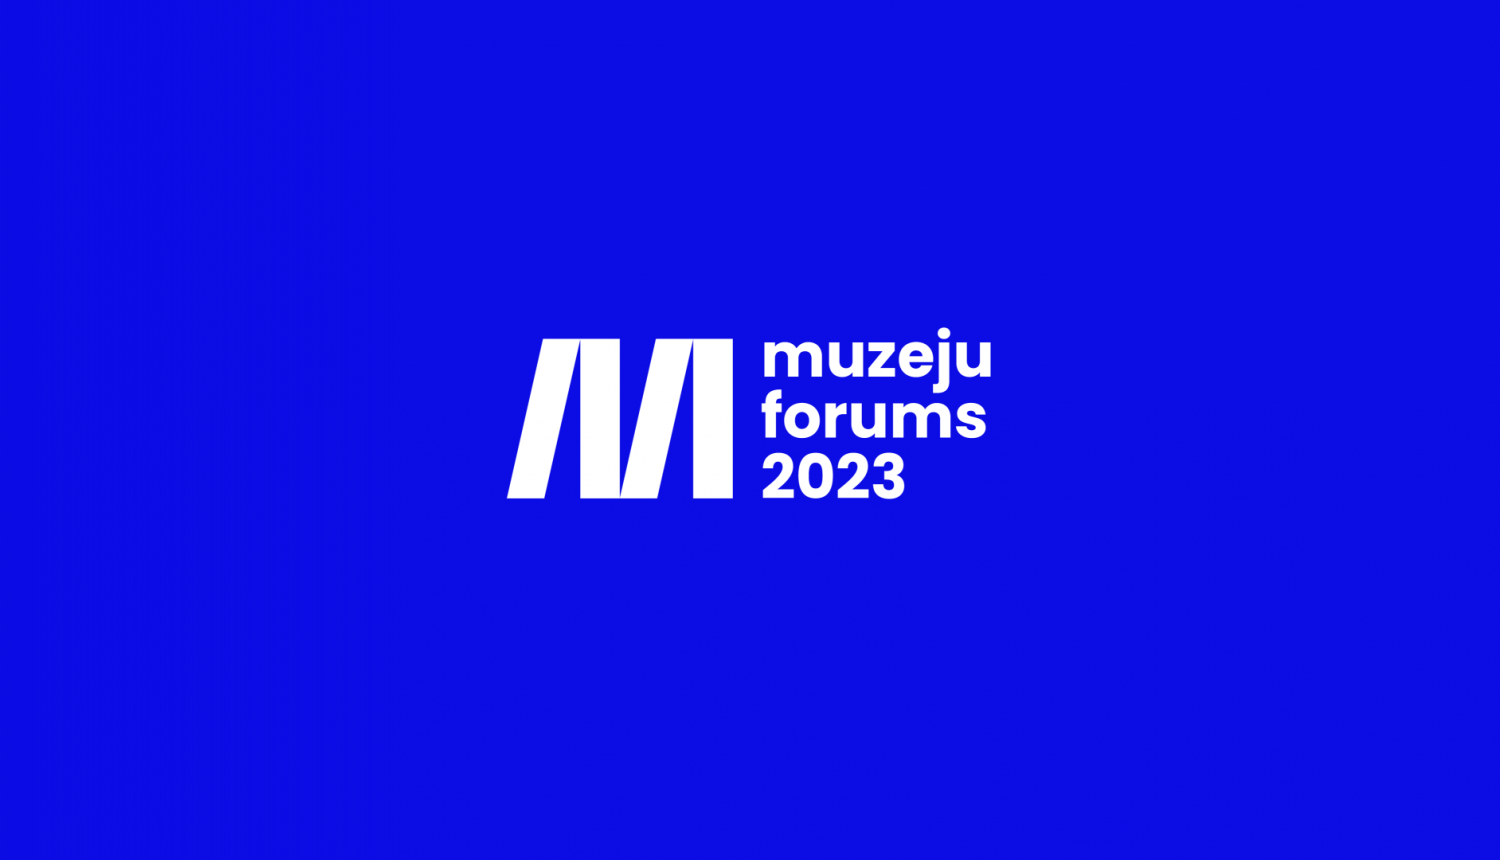 "Latvijas Muzeju forums 2023" logo